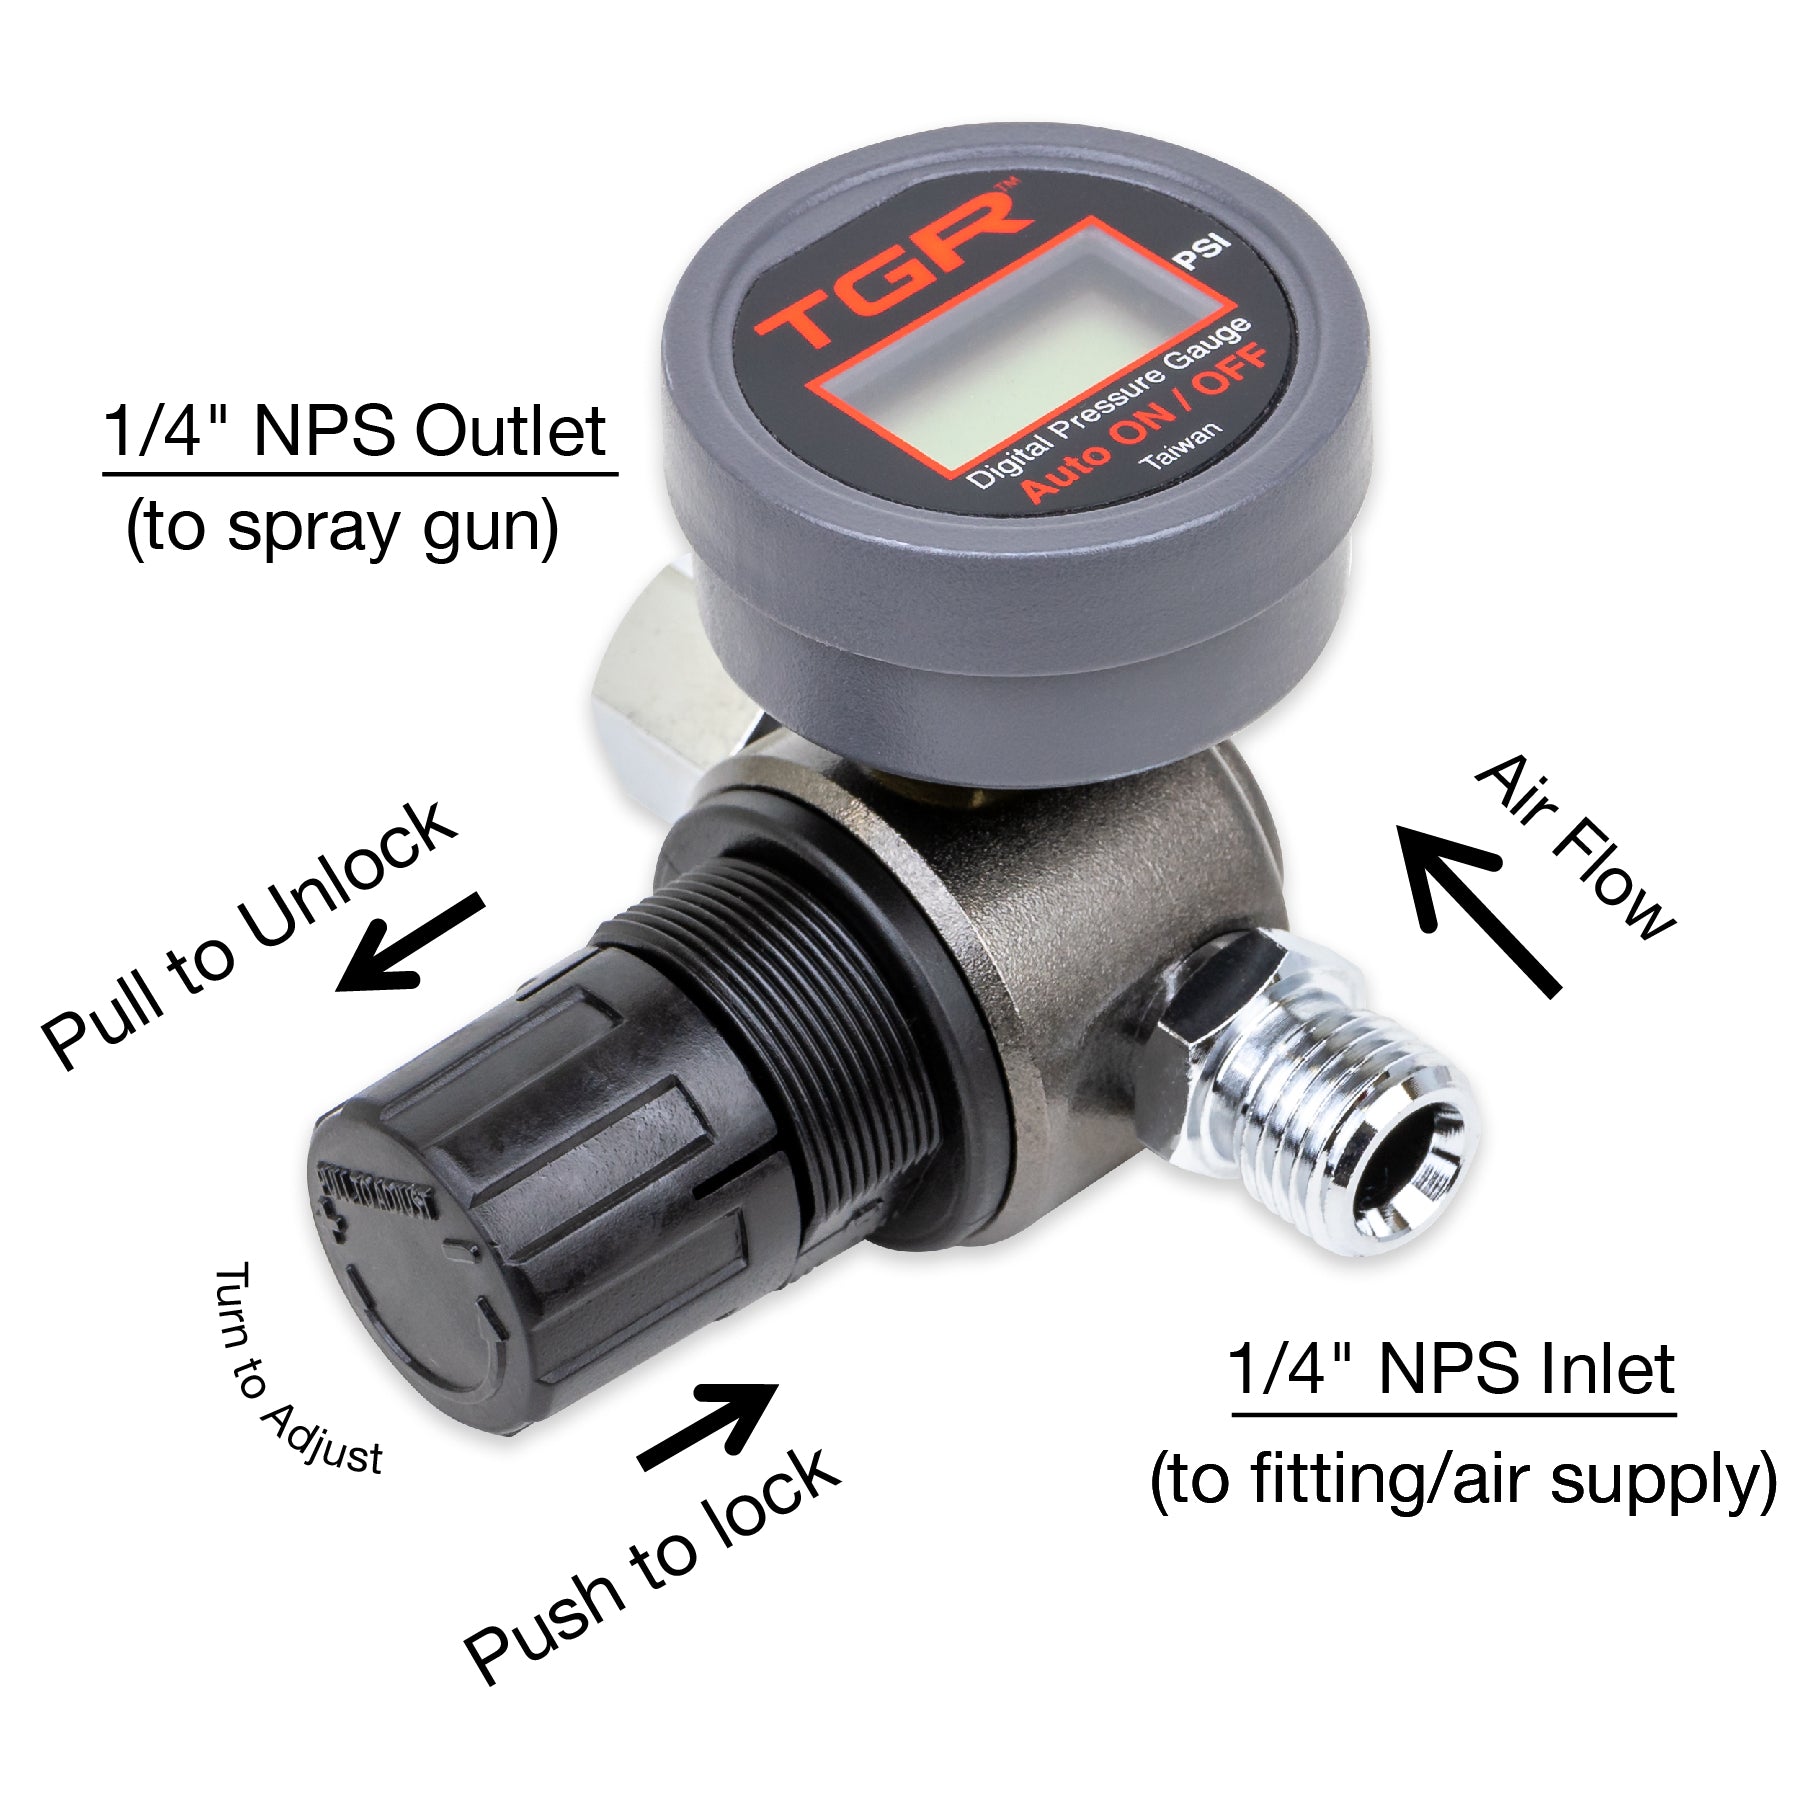 HVLP Spray Gun Air Regulator with Automatic Digital Pressure Gauge and Diaphragm Control - Tool Guy Republic